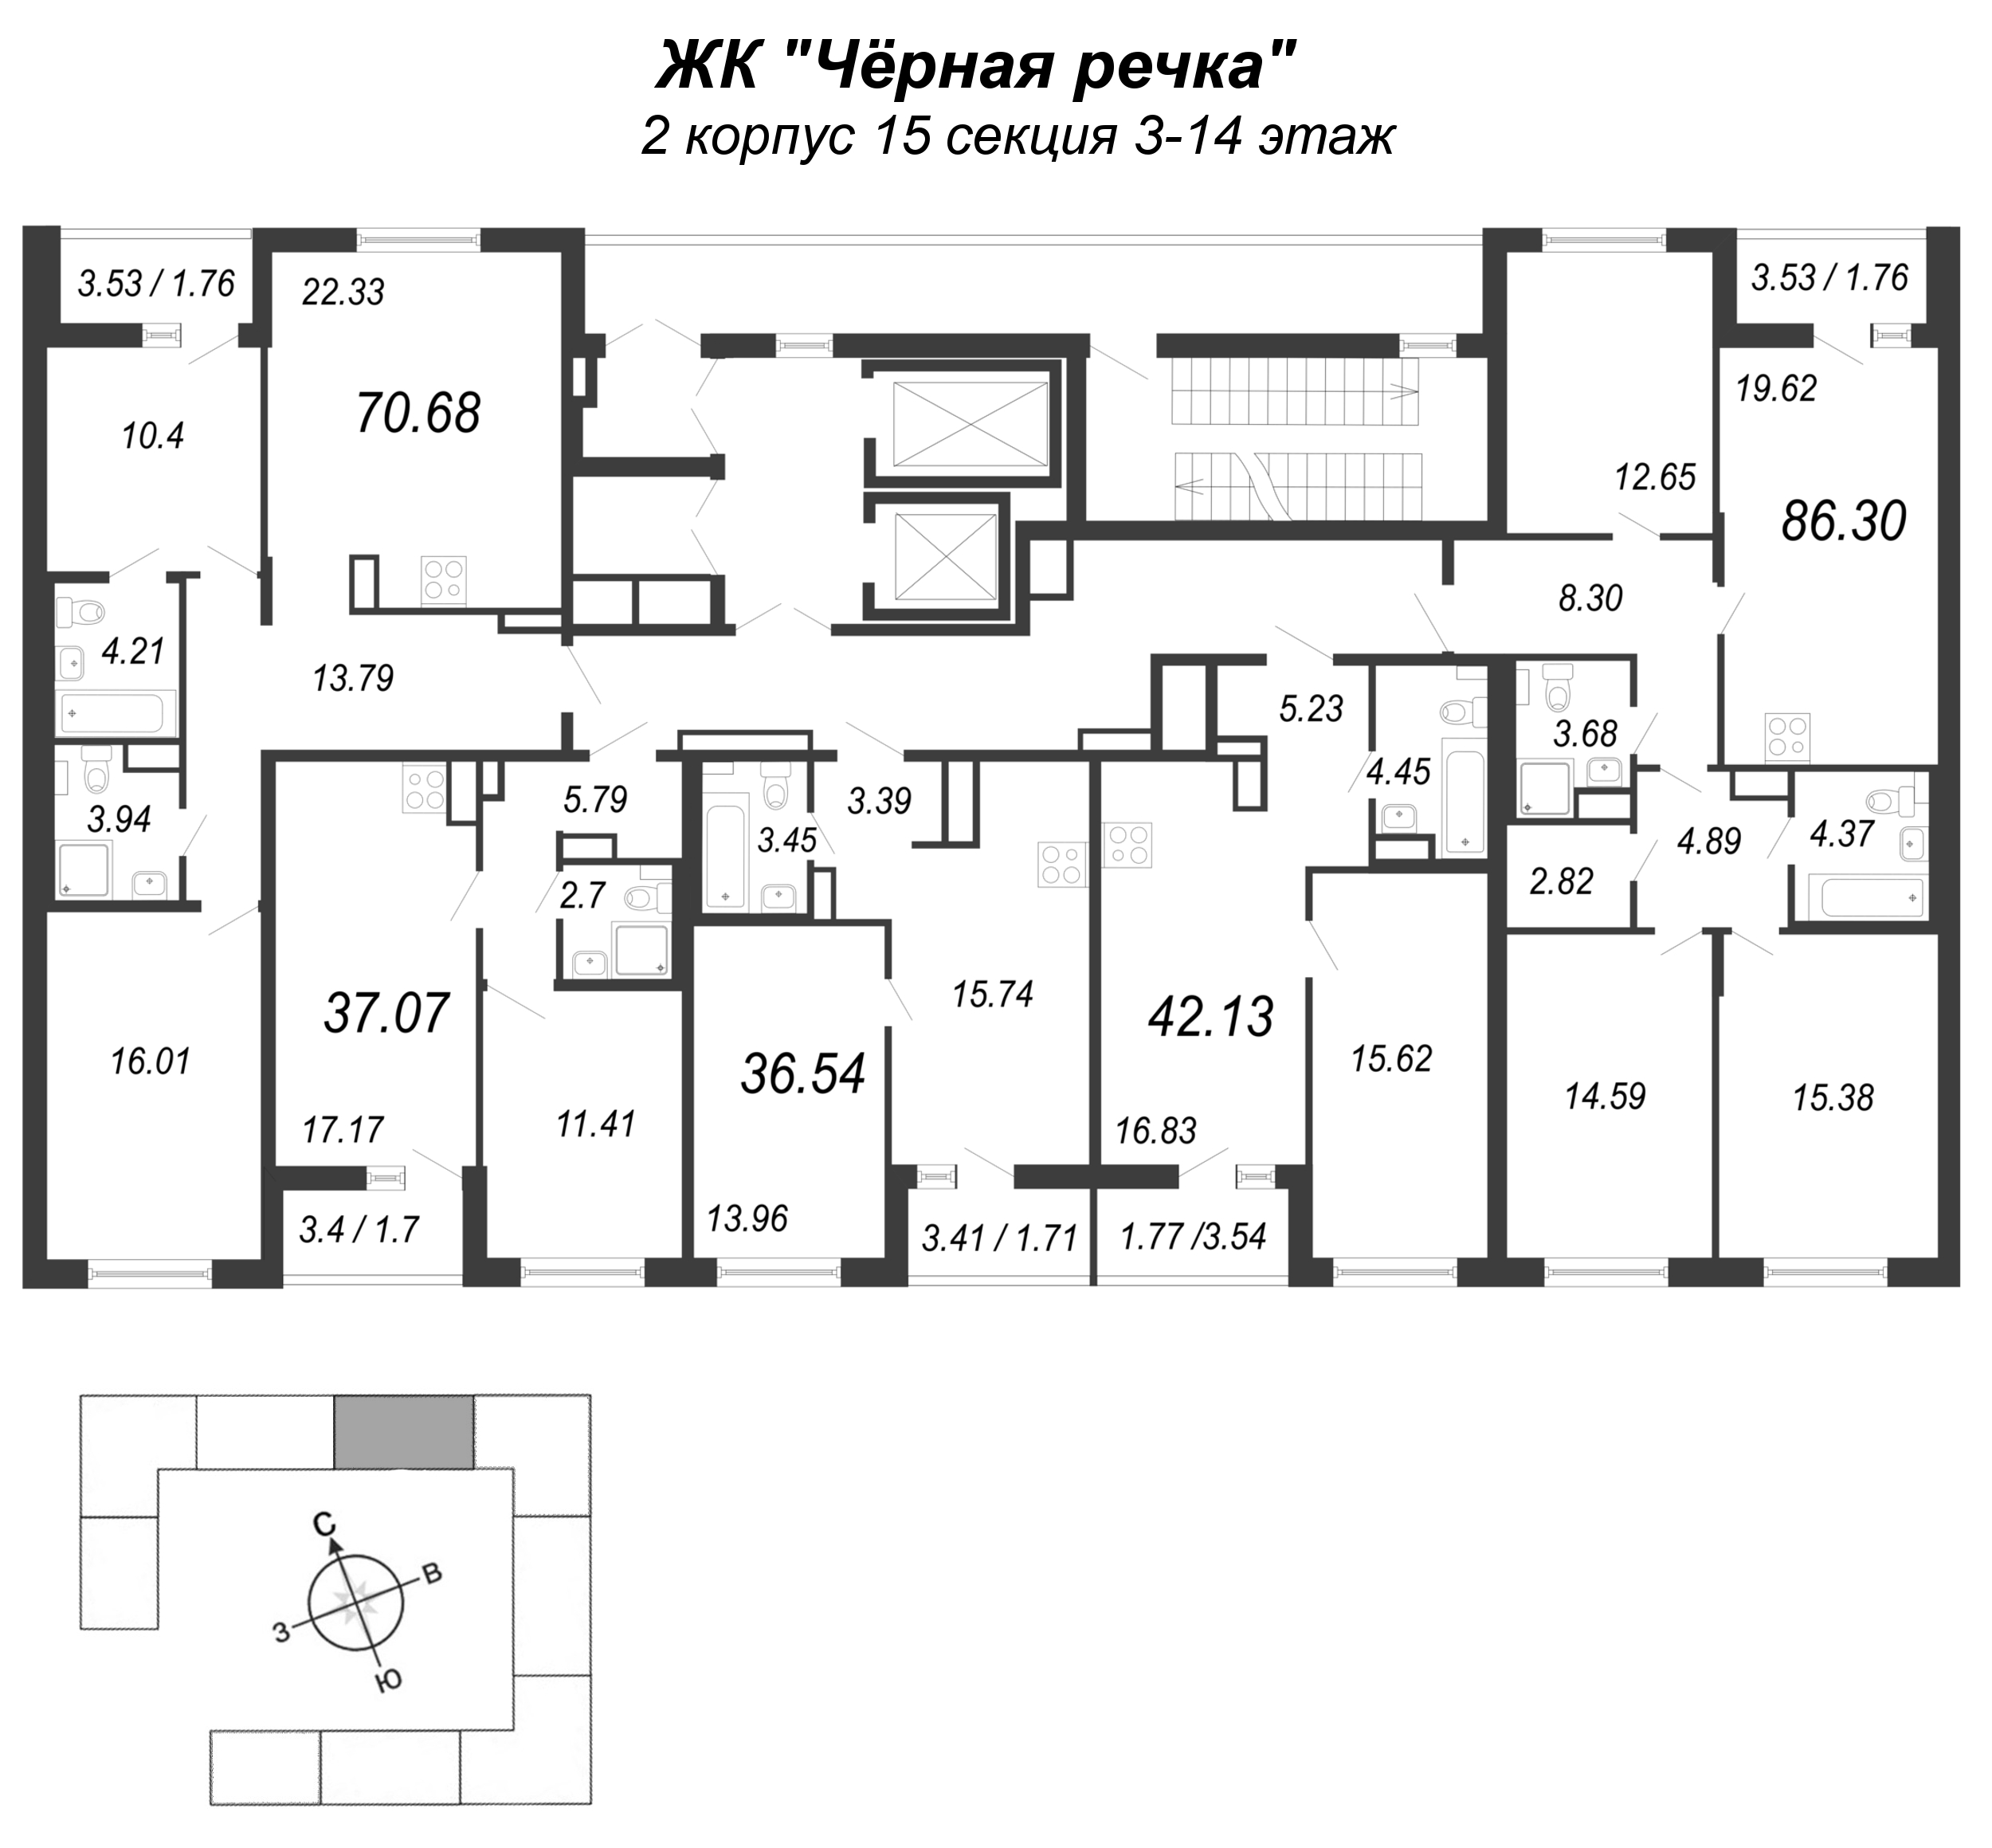 2-комнатная (Евро) квартира, 37.07 м² - планировка этажа